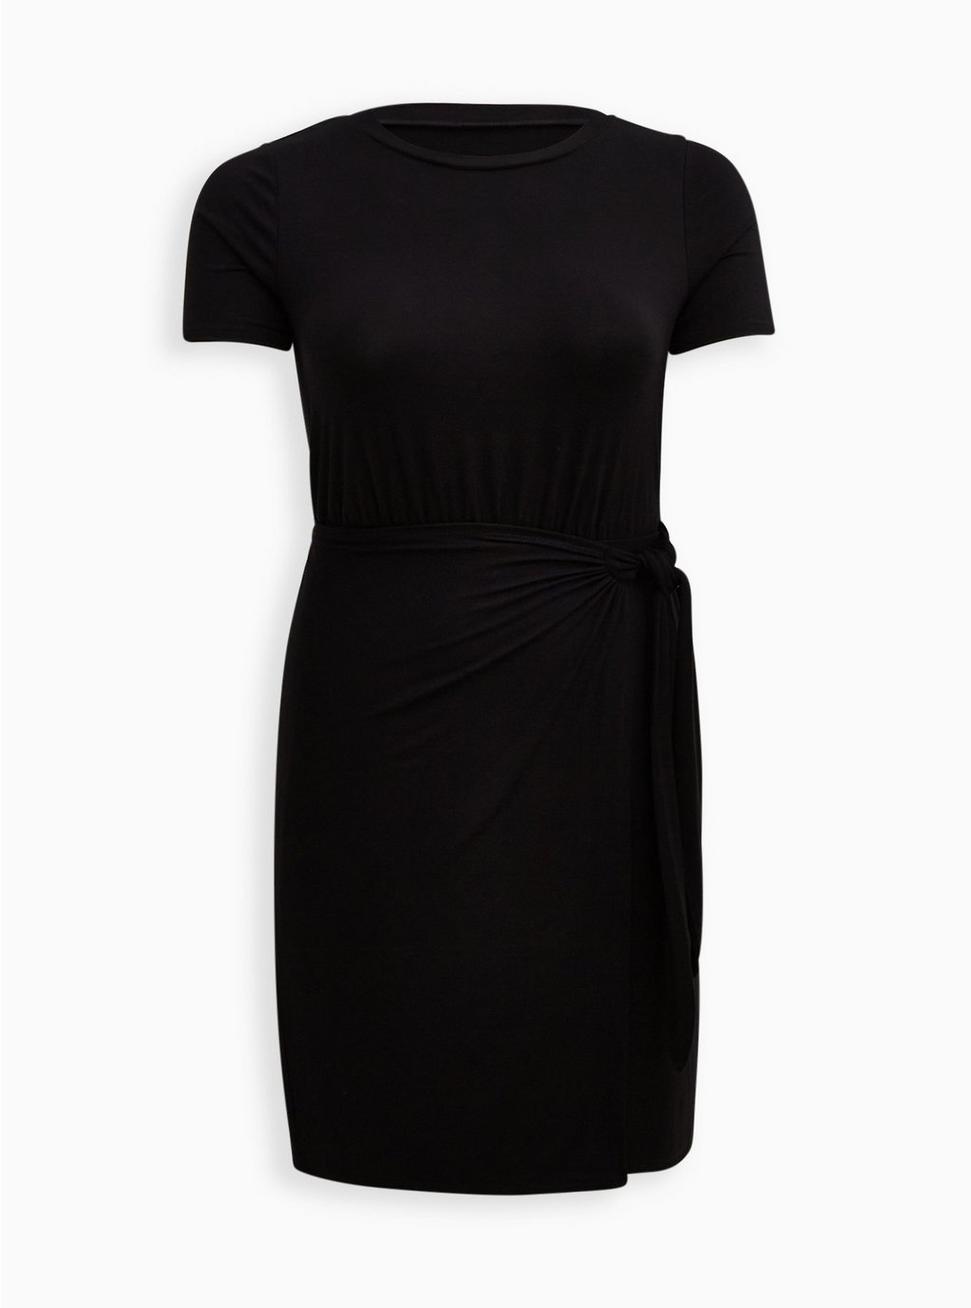 Wrap Skirt Mini Dress - Super Soft Black, DEEP BLACK, hi-res